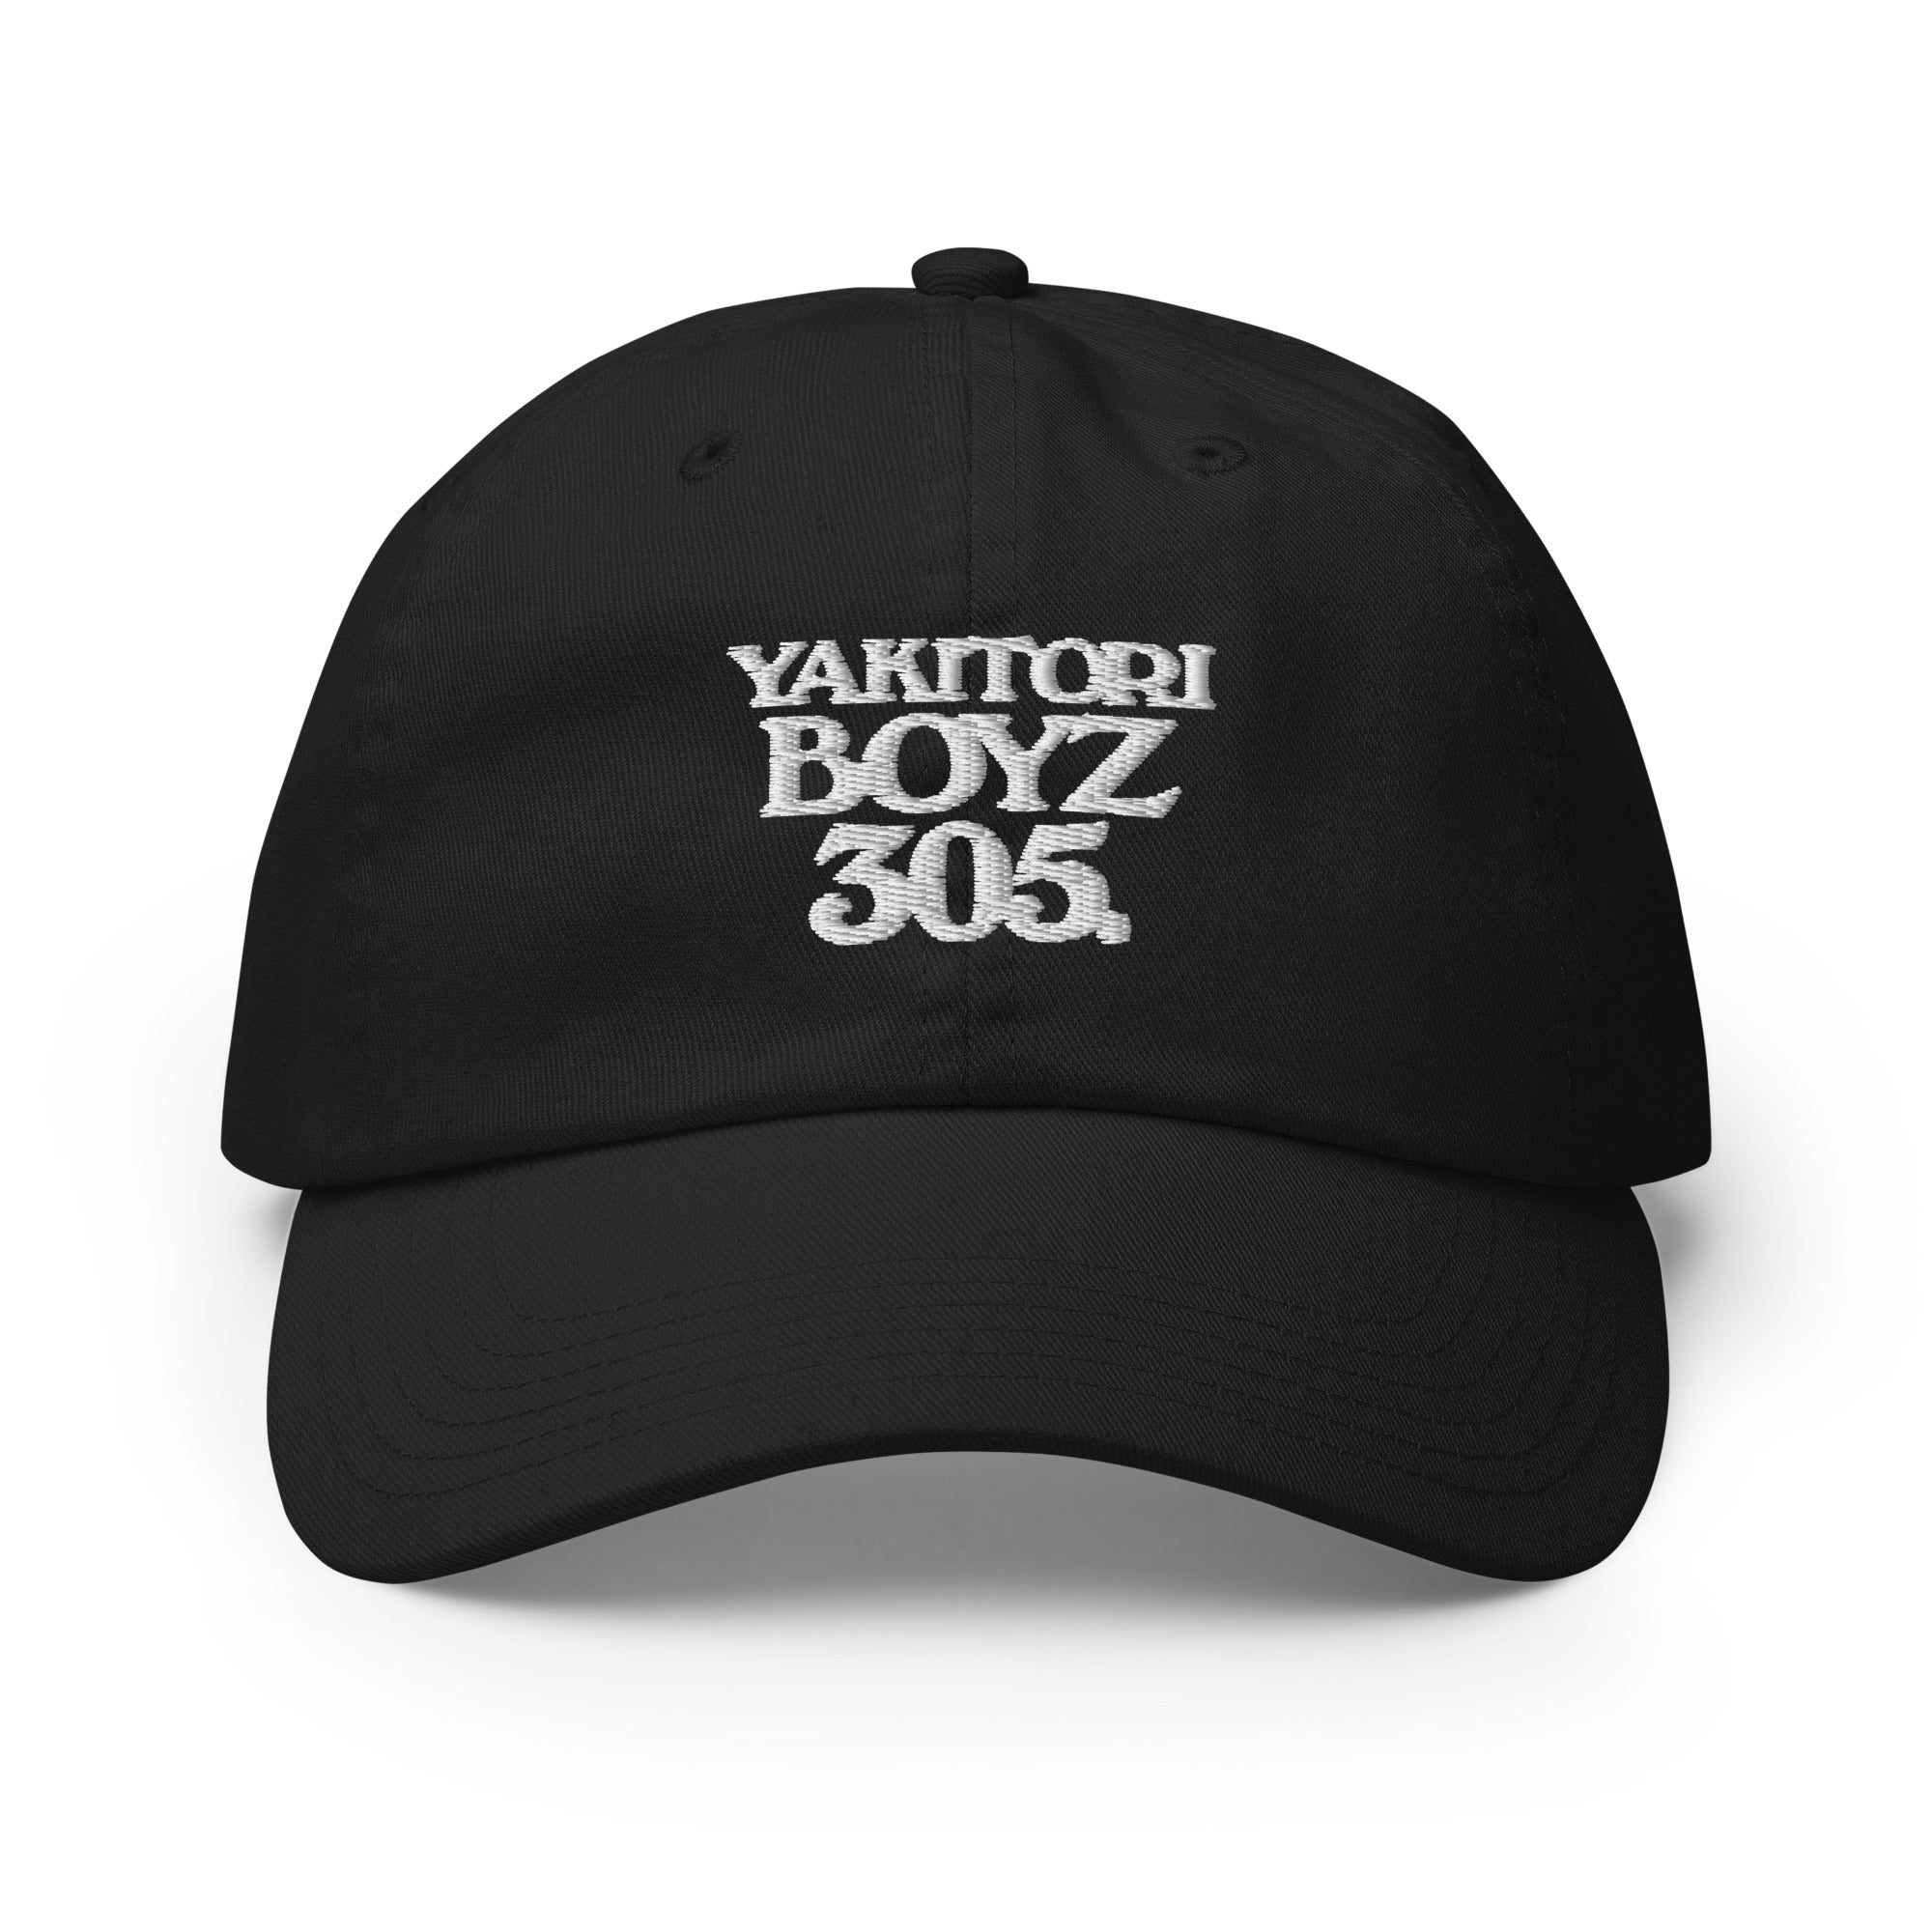 Yakitori Boyz "305" Champion Dad Cap